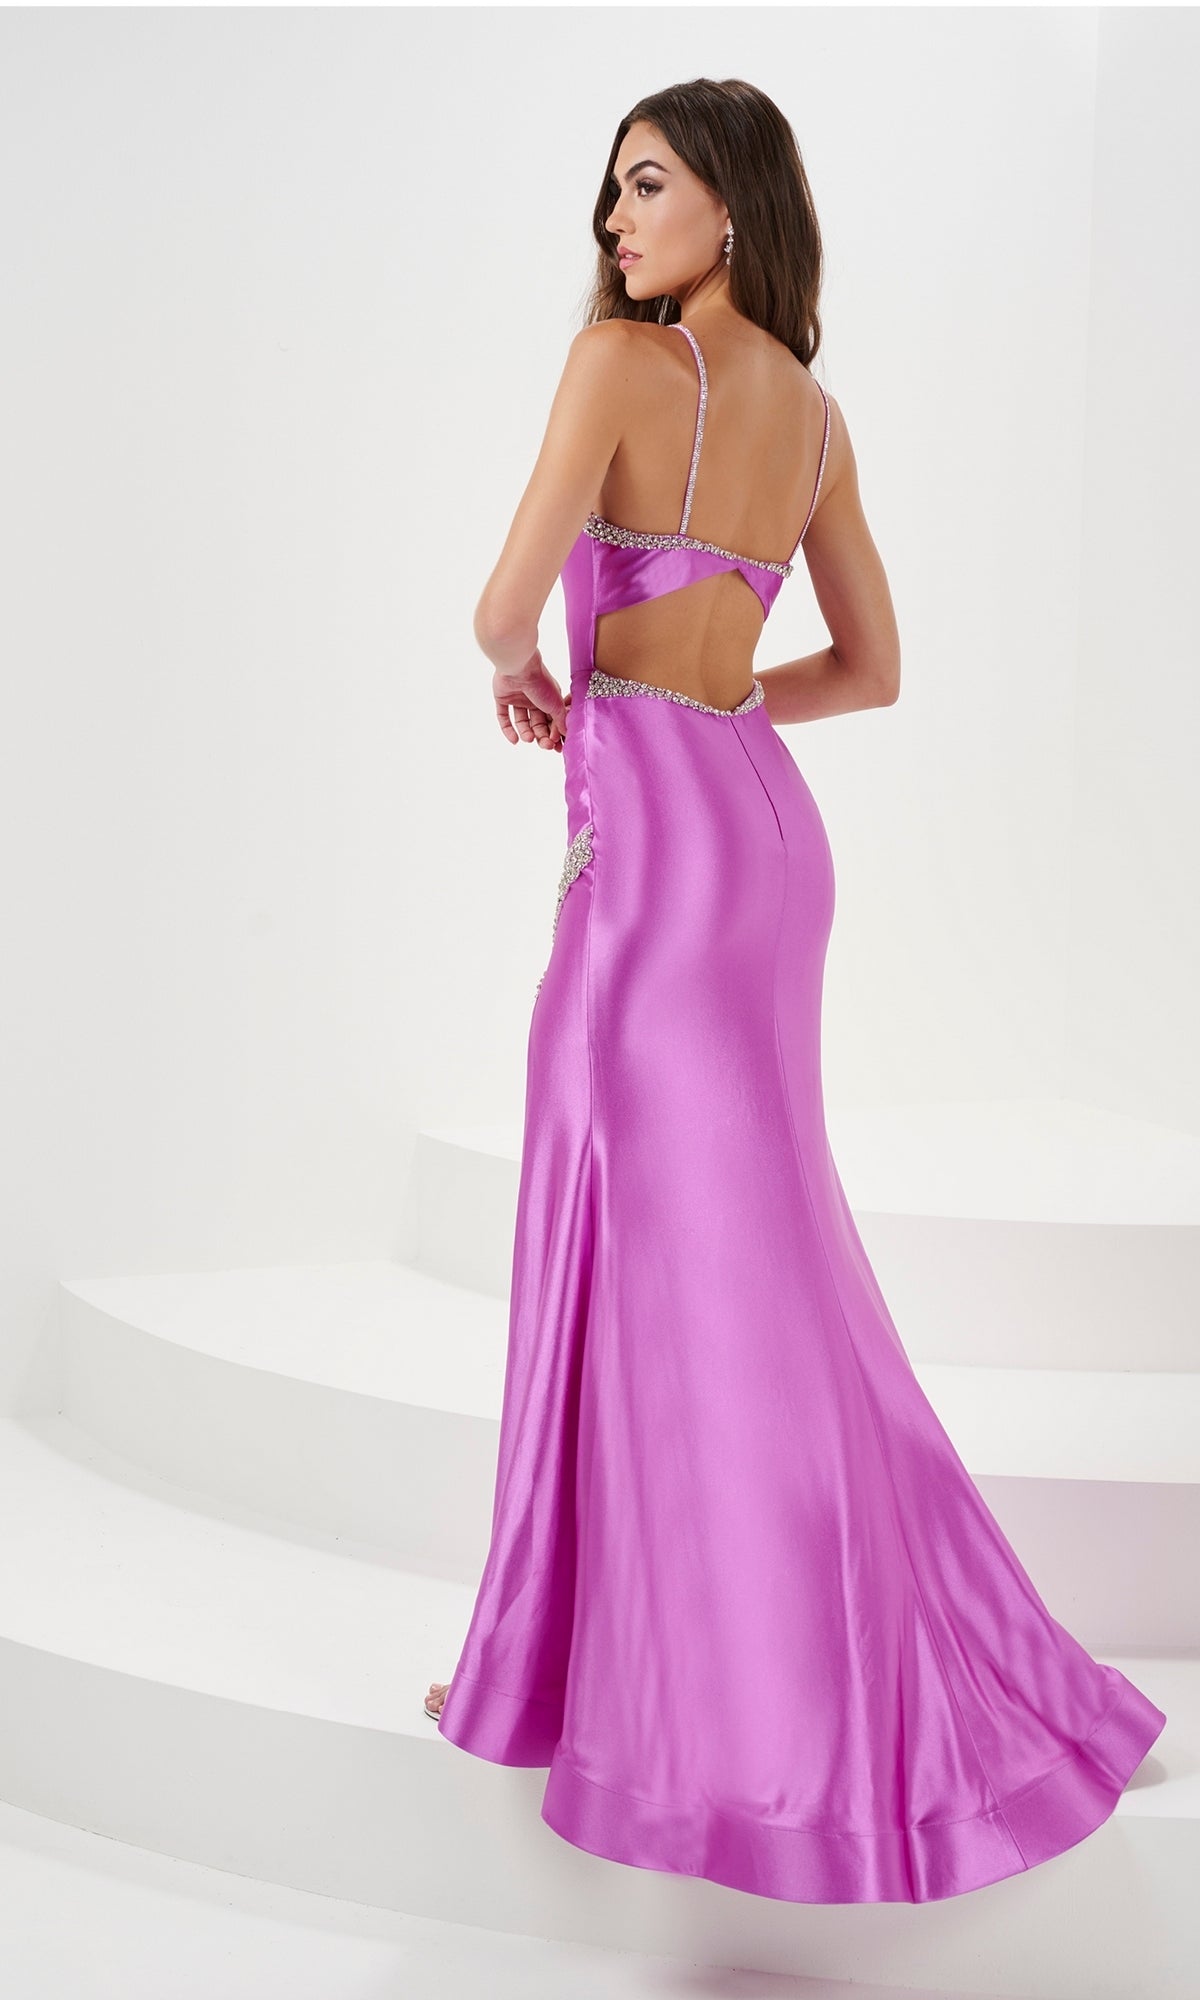 Bead-Trimmed Long Mermaid Prom Dress 14173